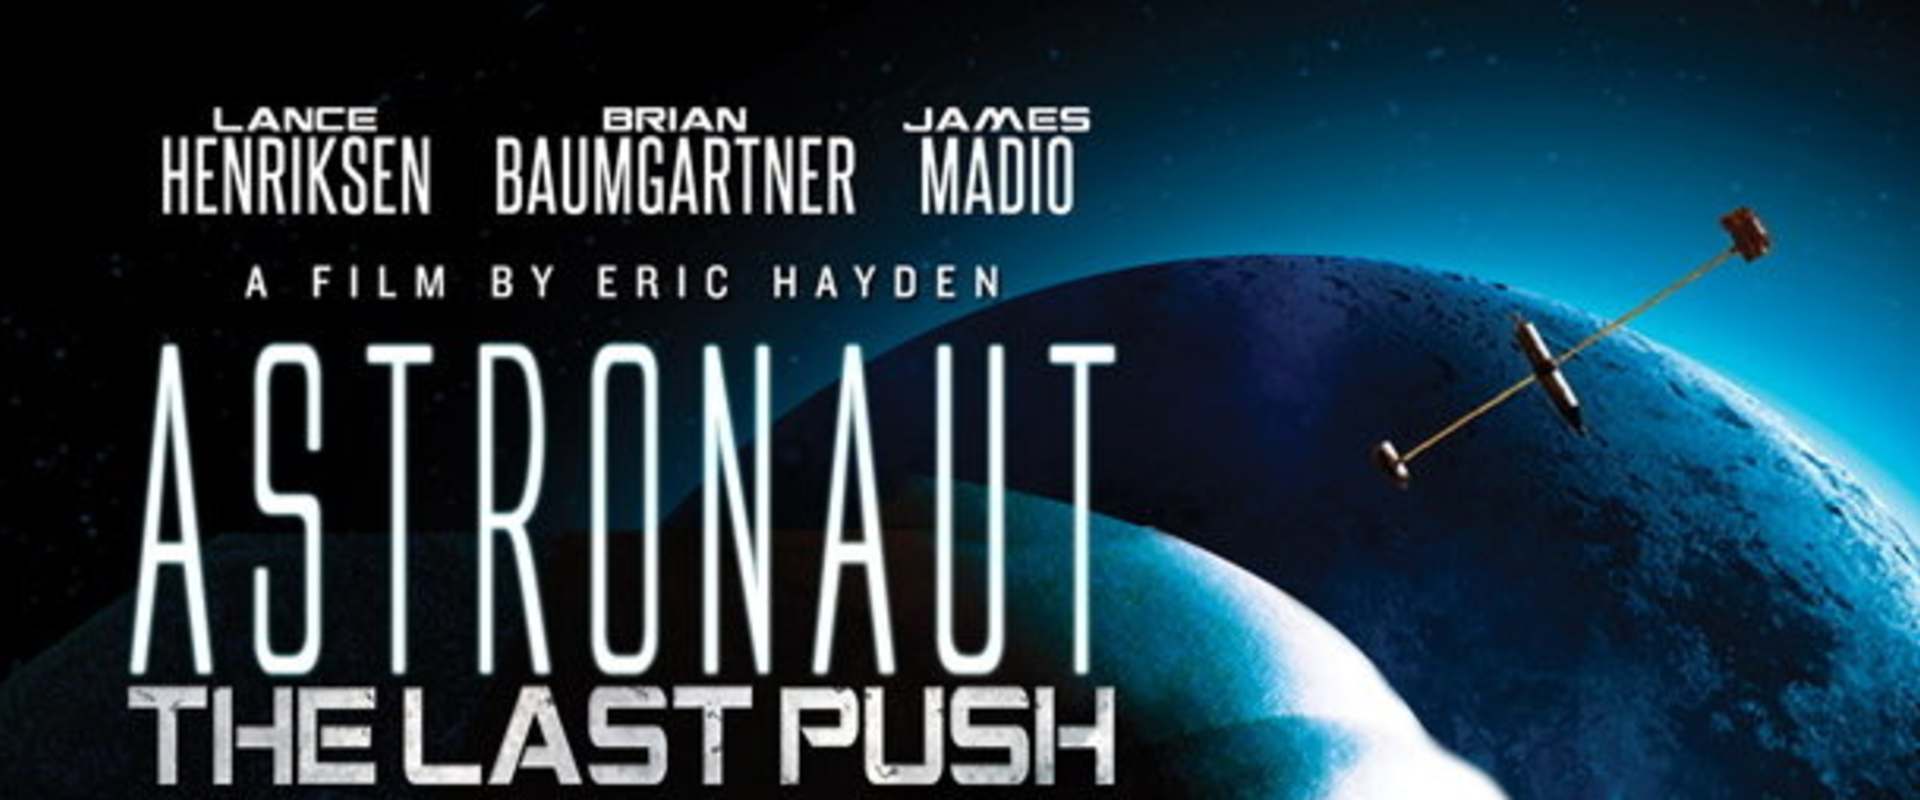 Astronaut: The Last Push background 1